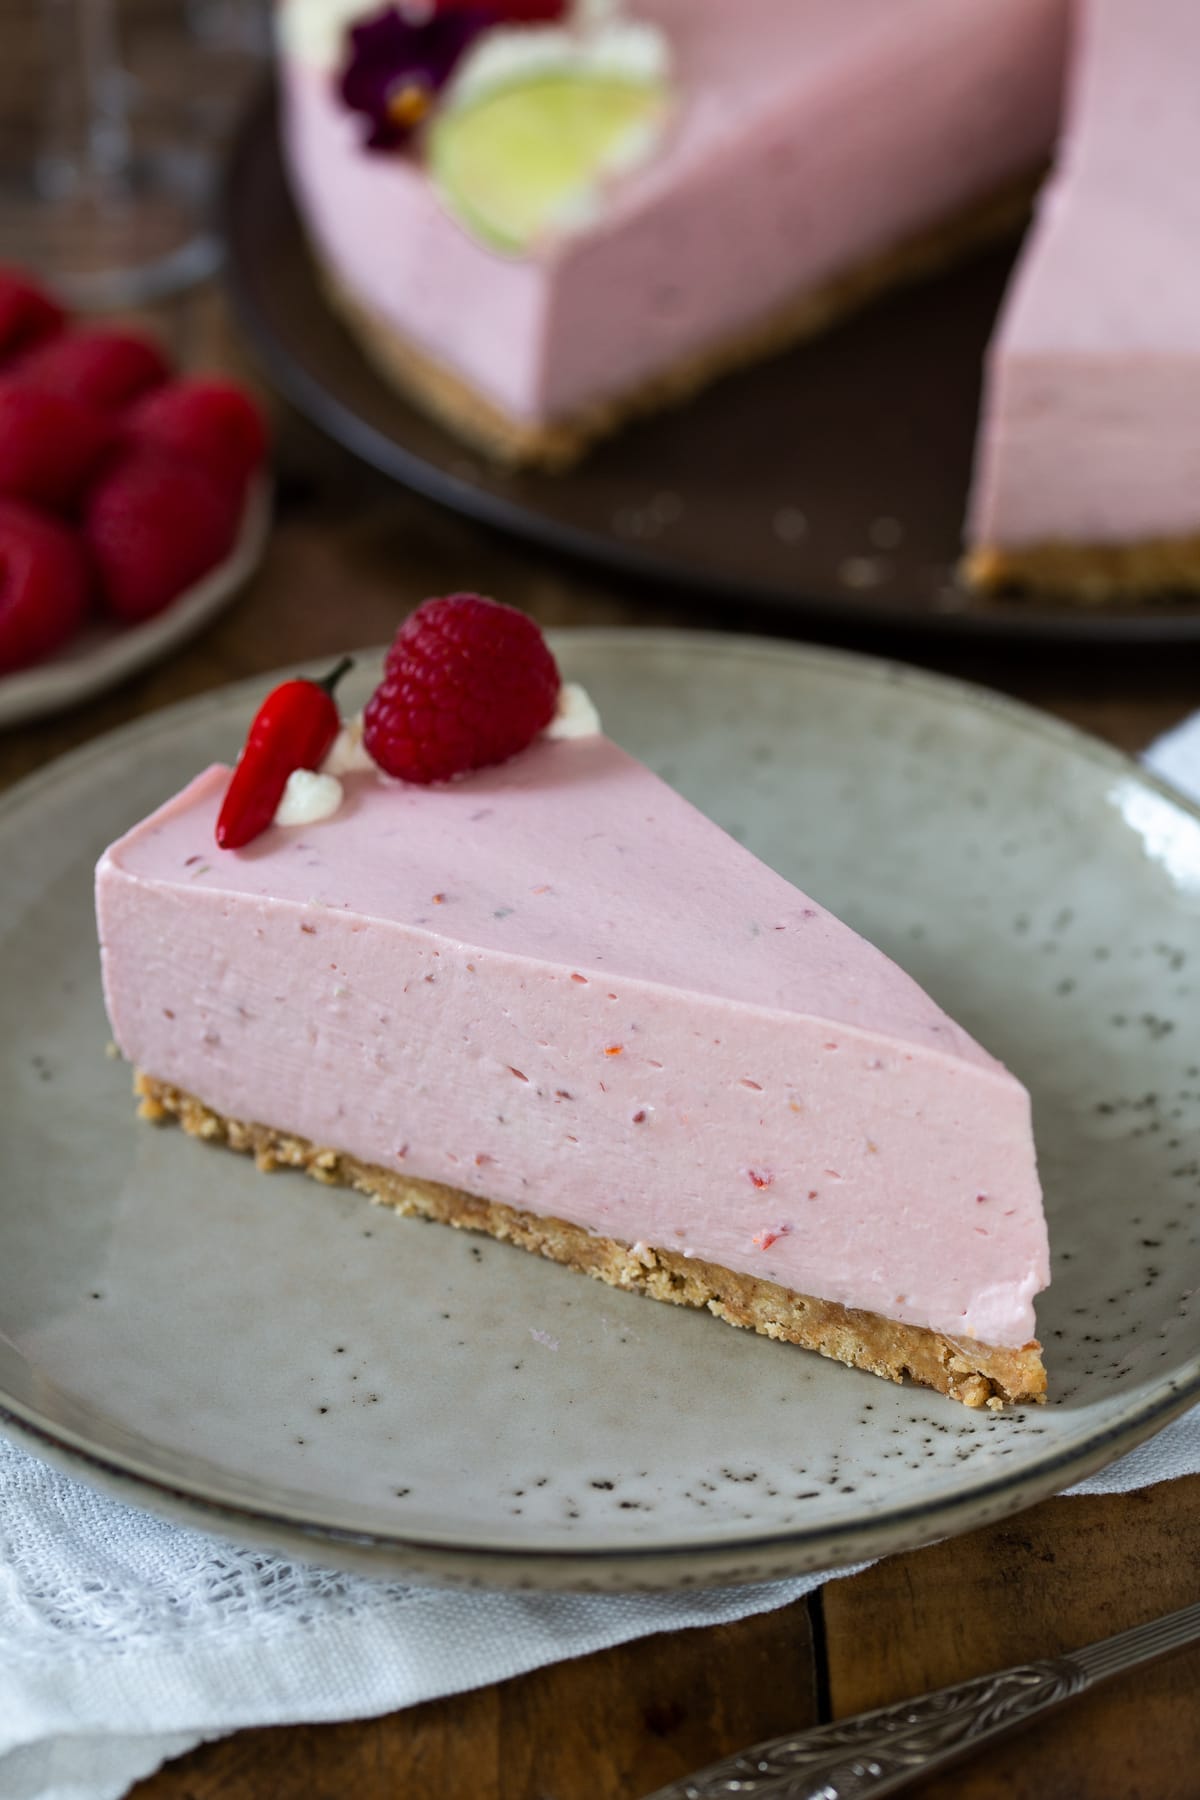 A slice of raspberry cheesecake on a beige plate.